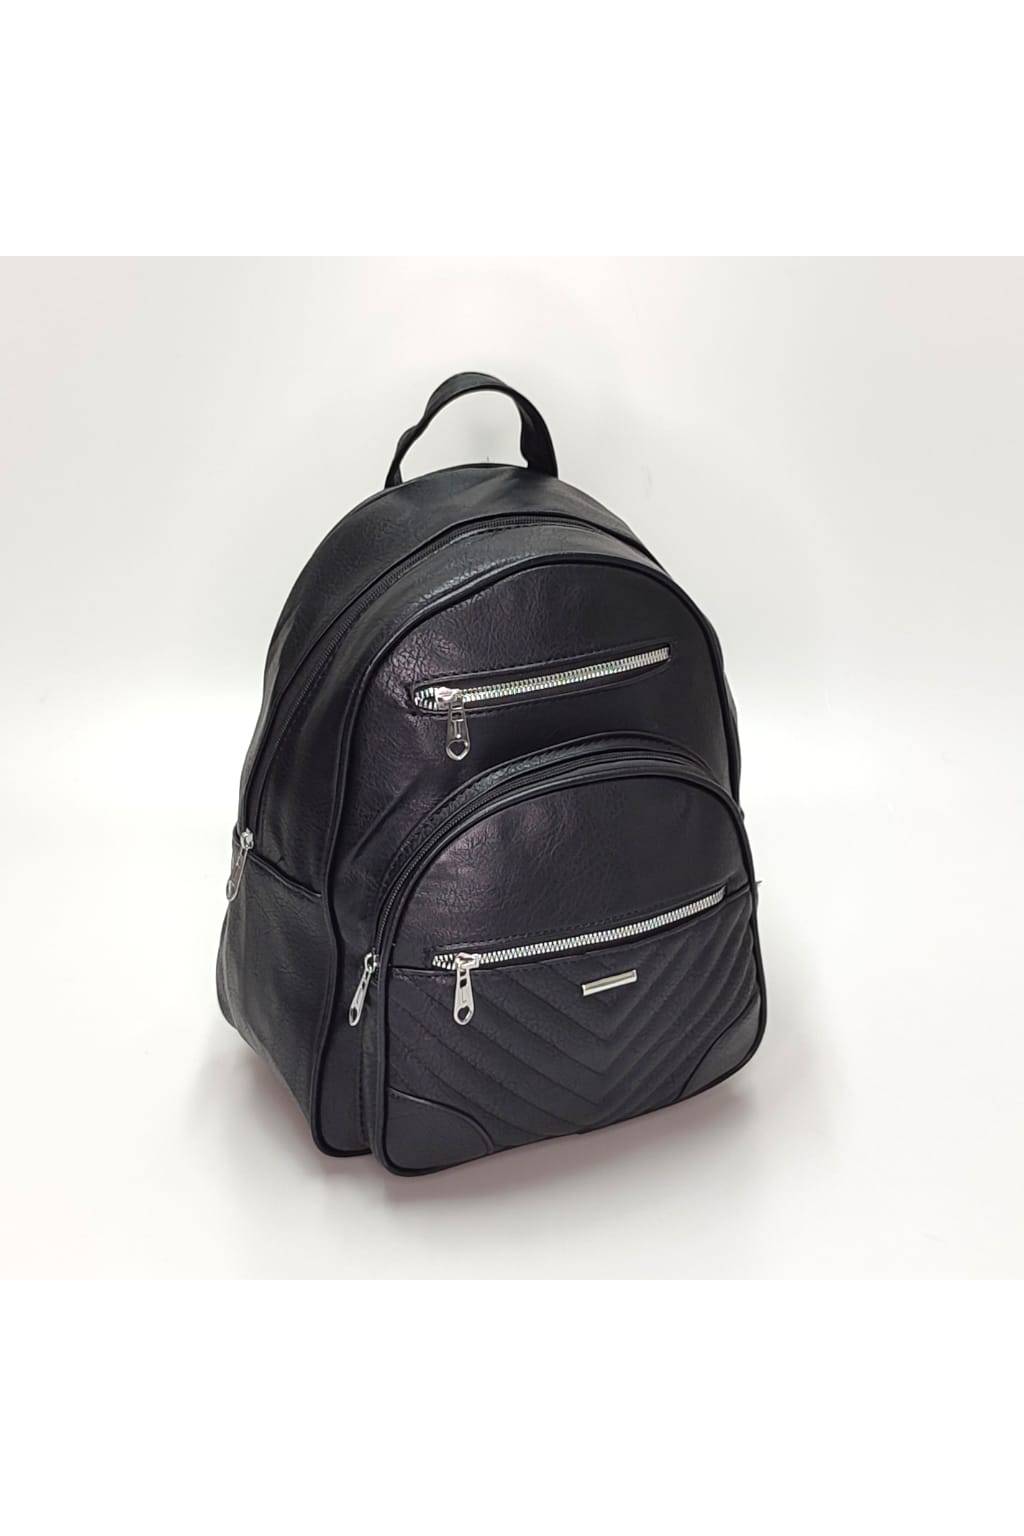 Dámsky ruksak 6314 čierny www.kabelky vypredaj (1)